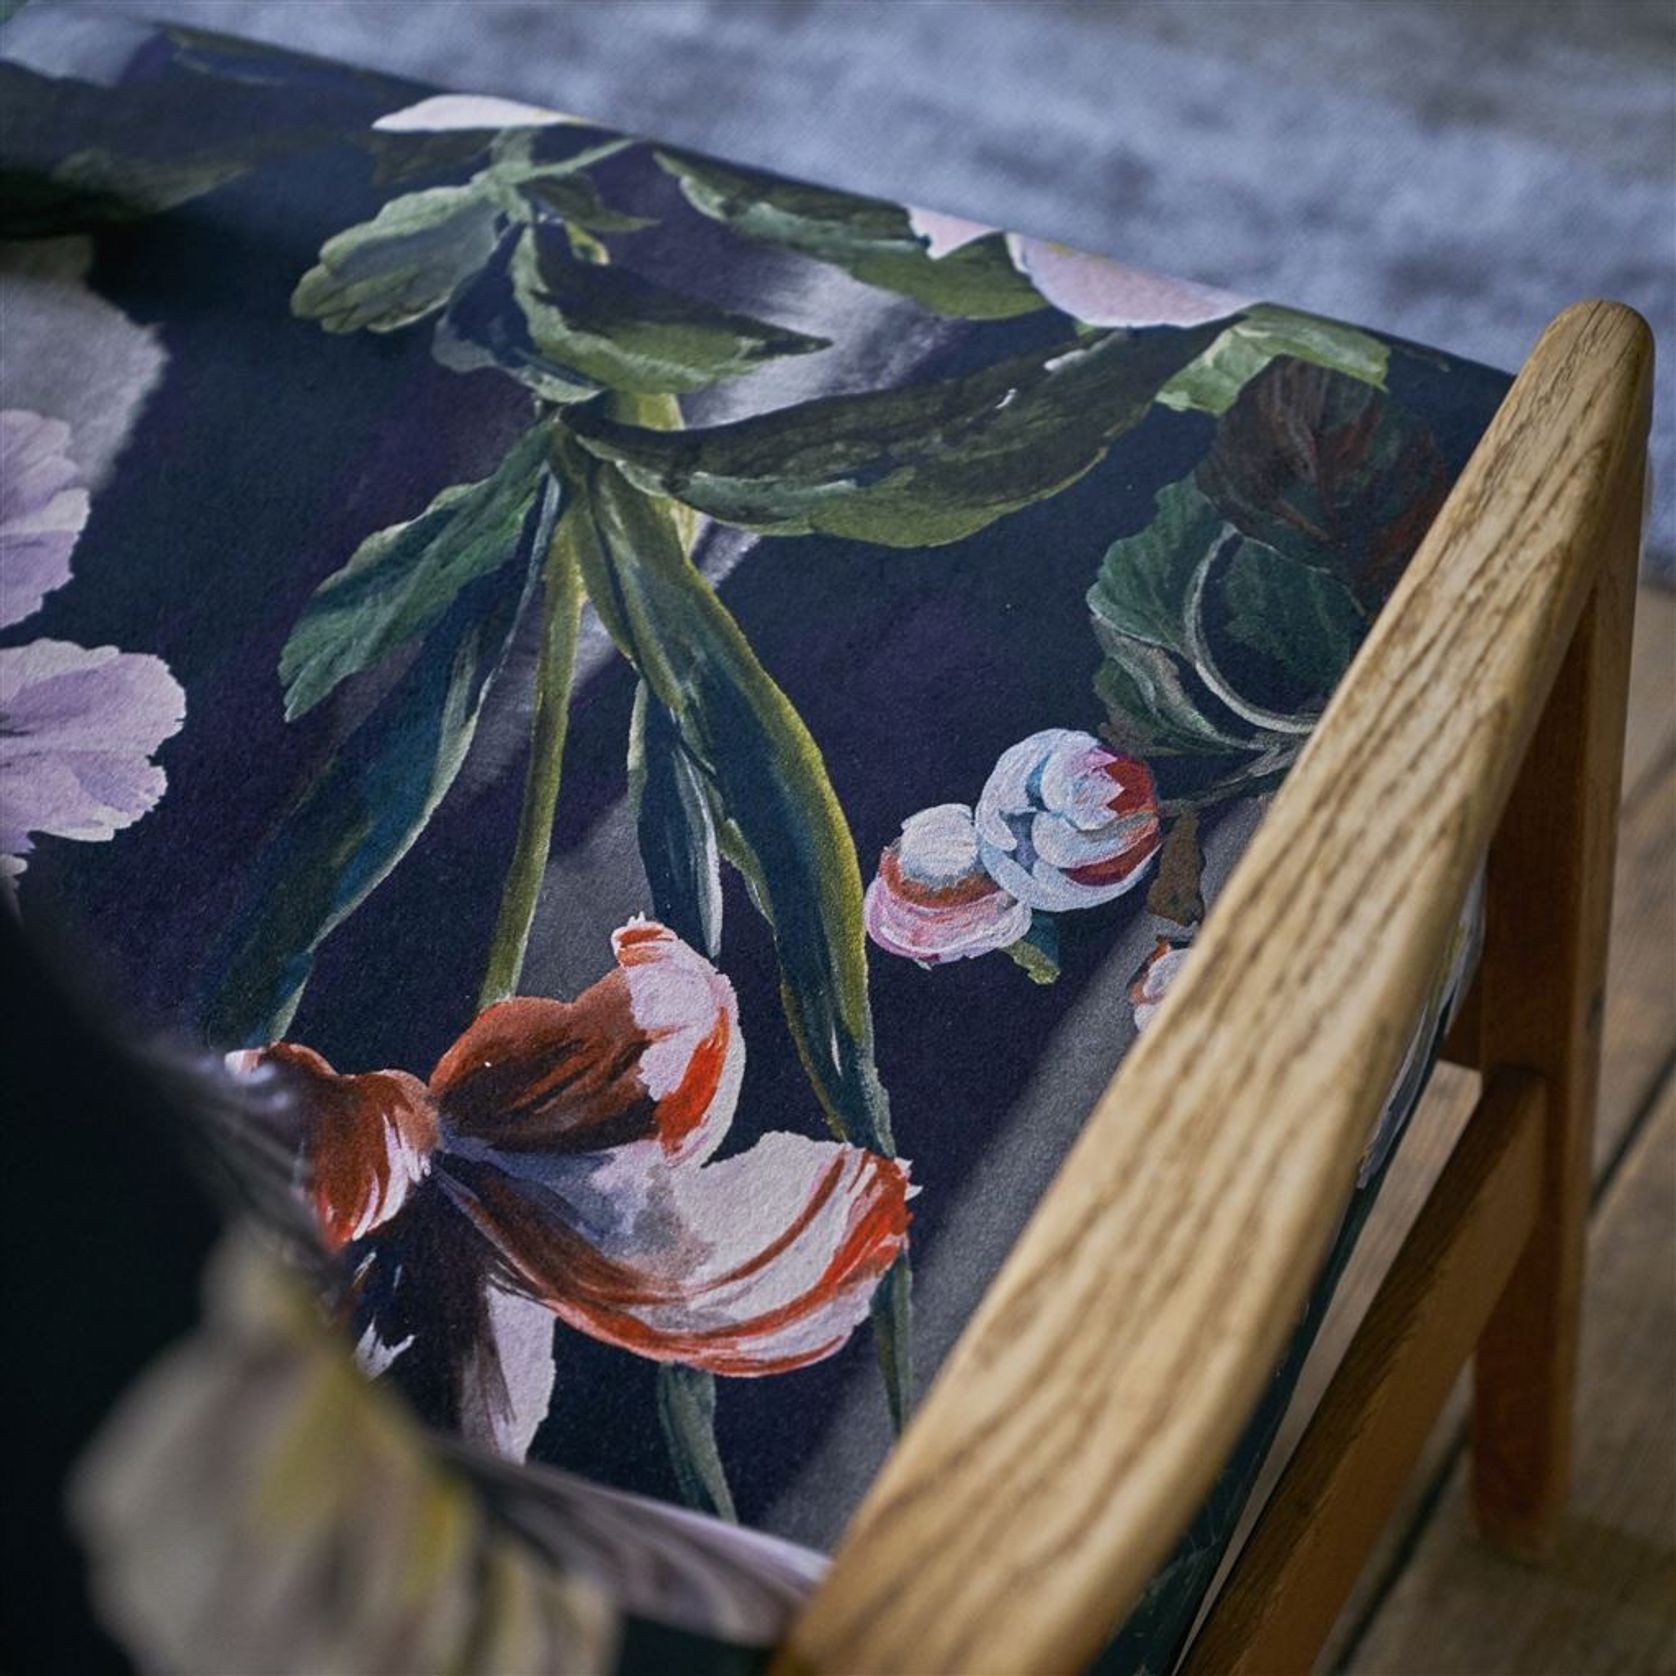 Delft Velvet Noir Fabrics by Designers Guild gallery detail image